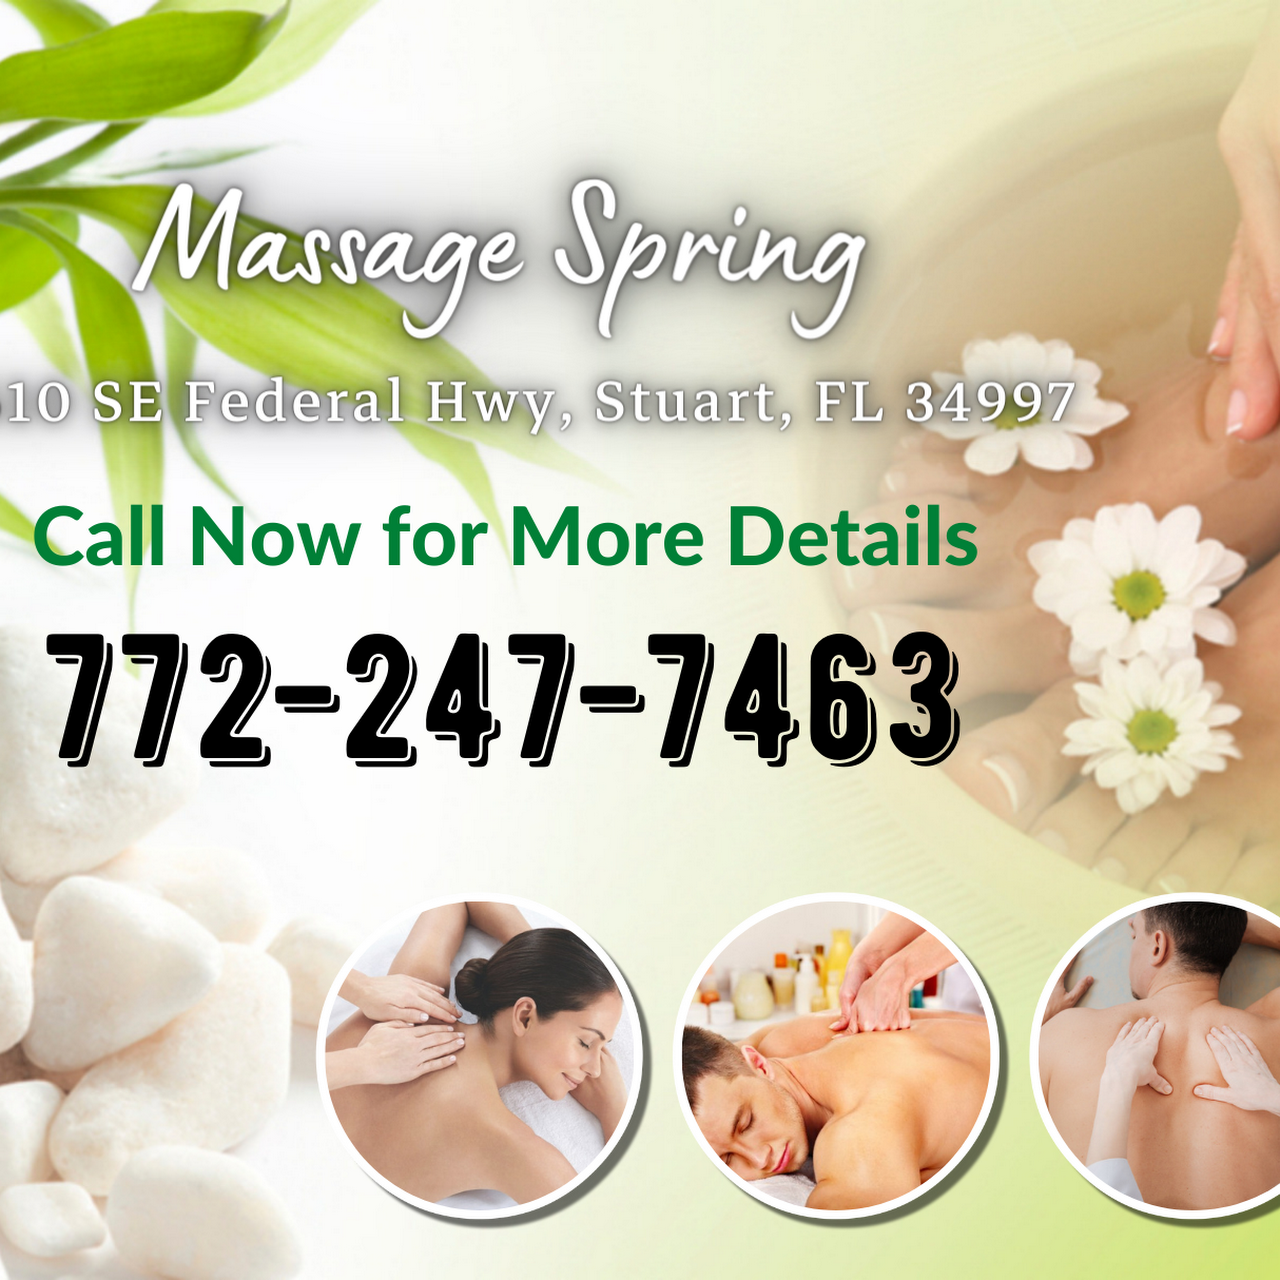 Massage Spring Massage Therapist In Stuart